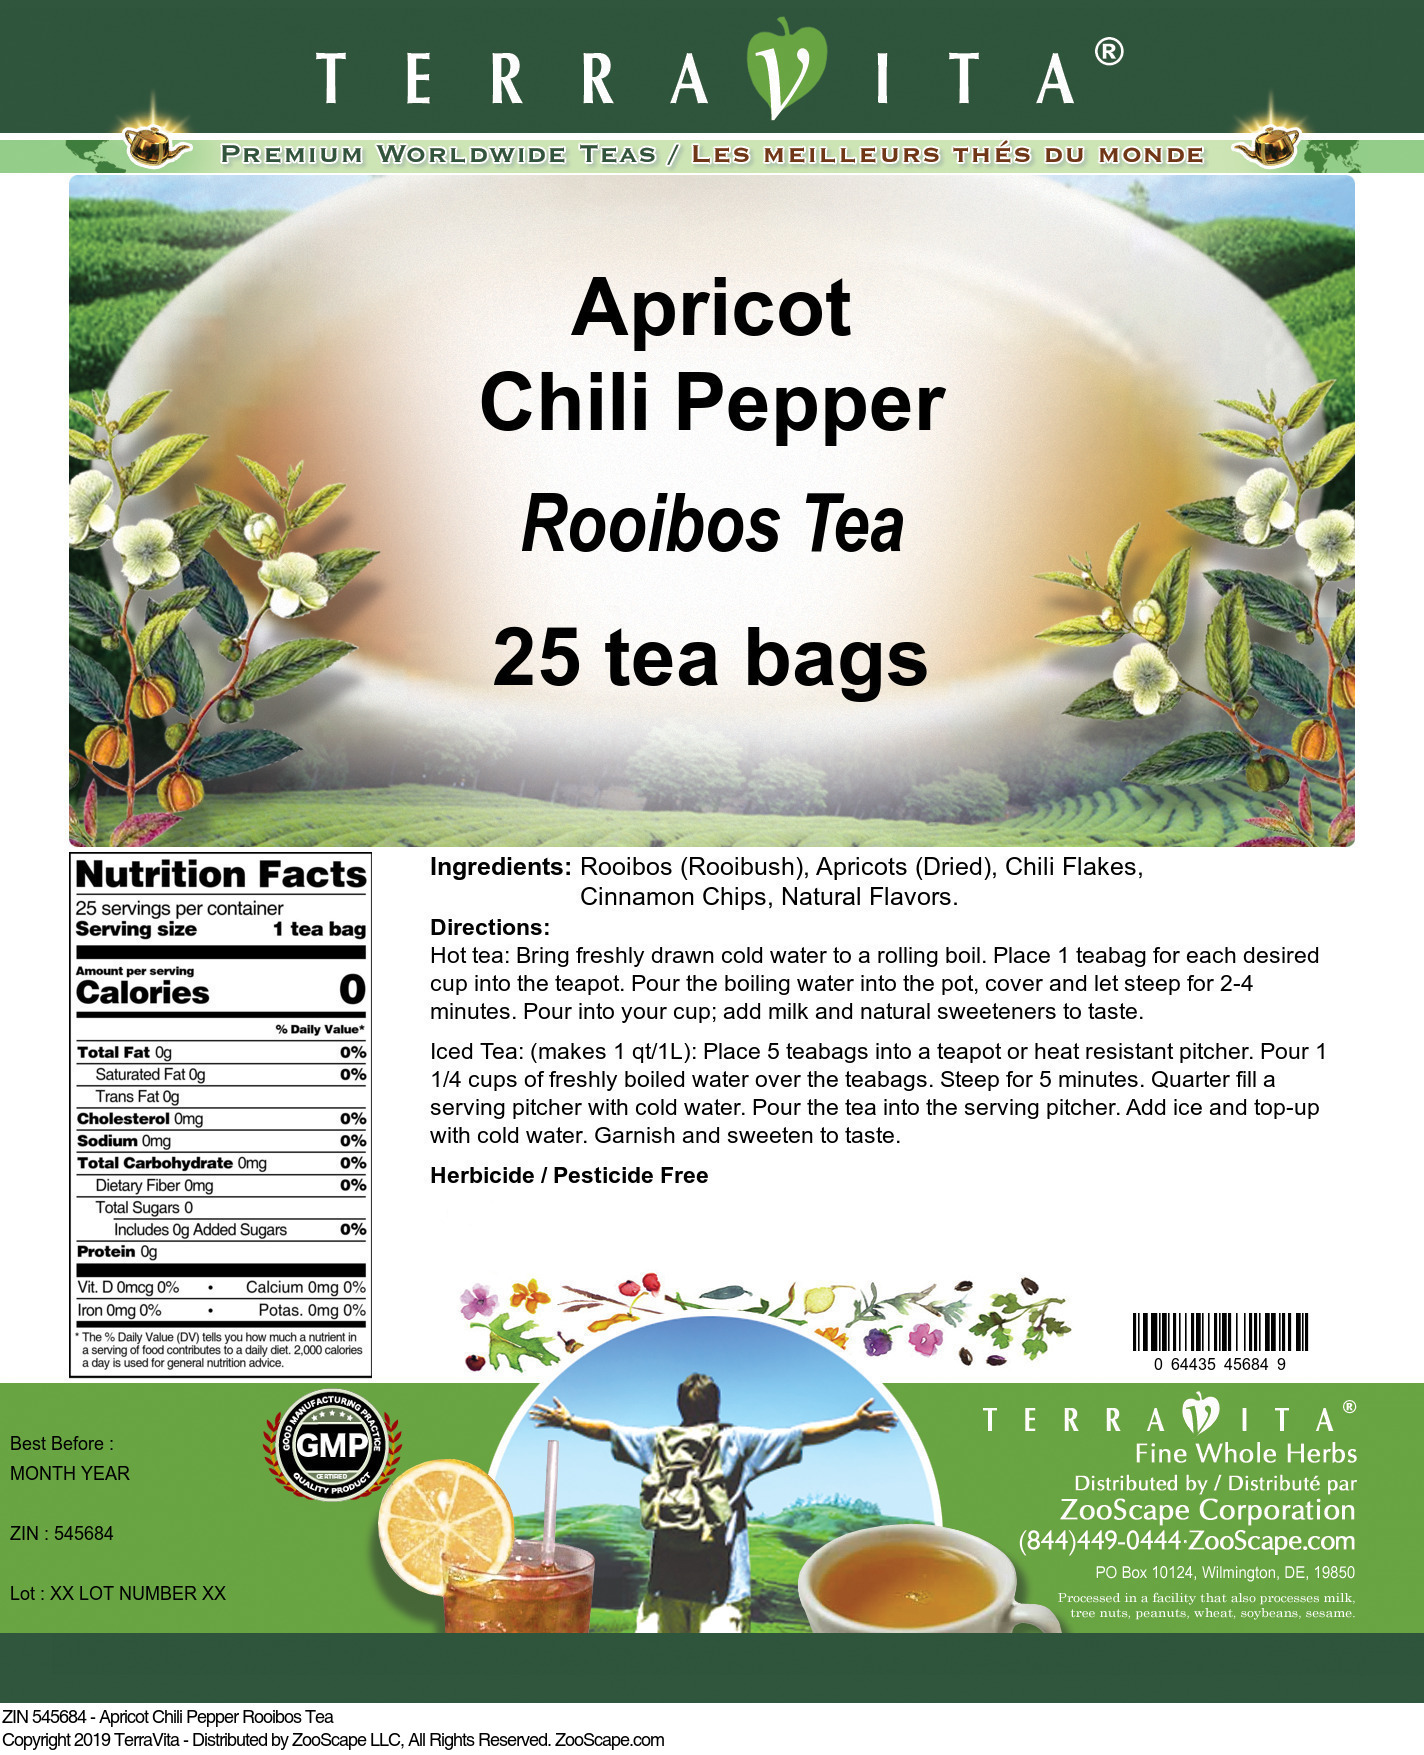 Apricot Chili Pepper Rooibos Tea - Label